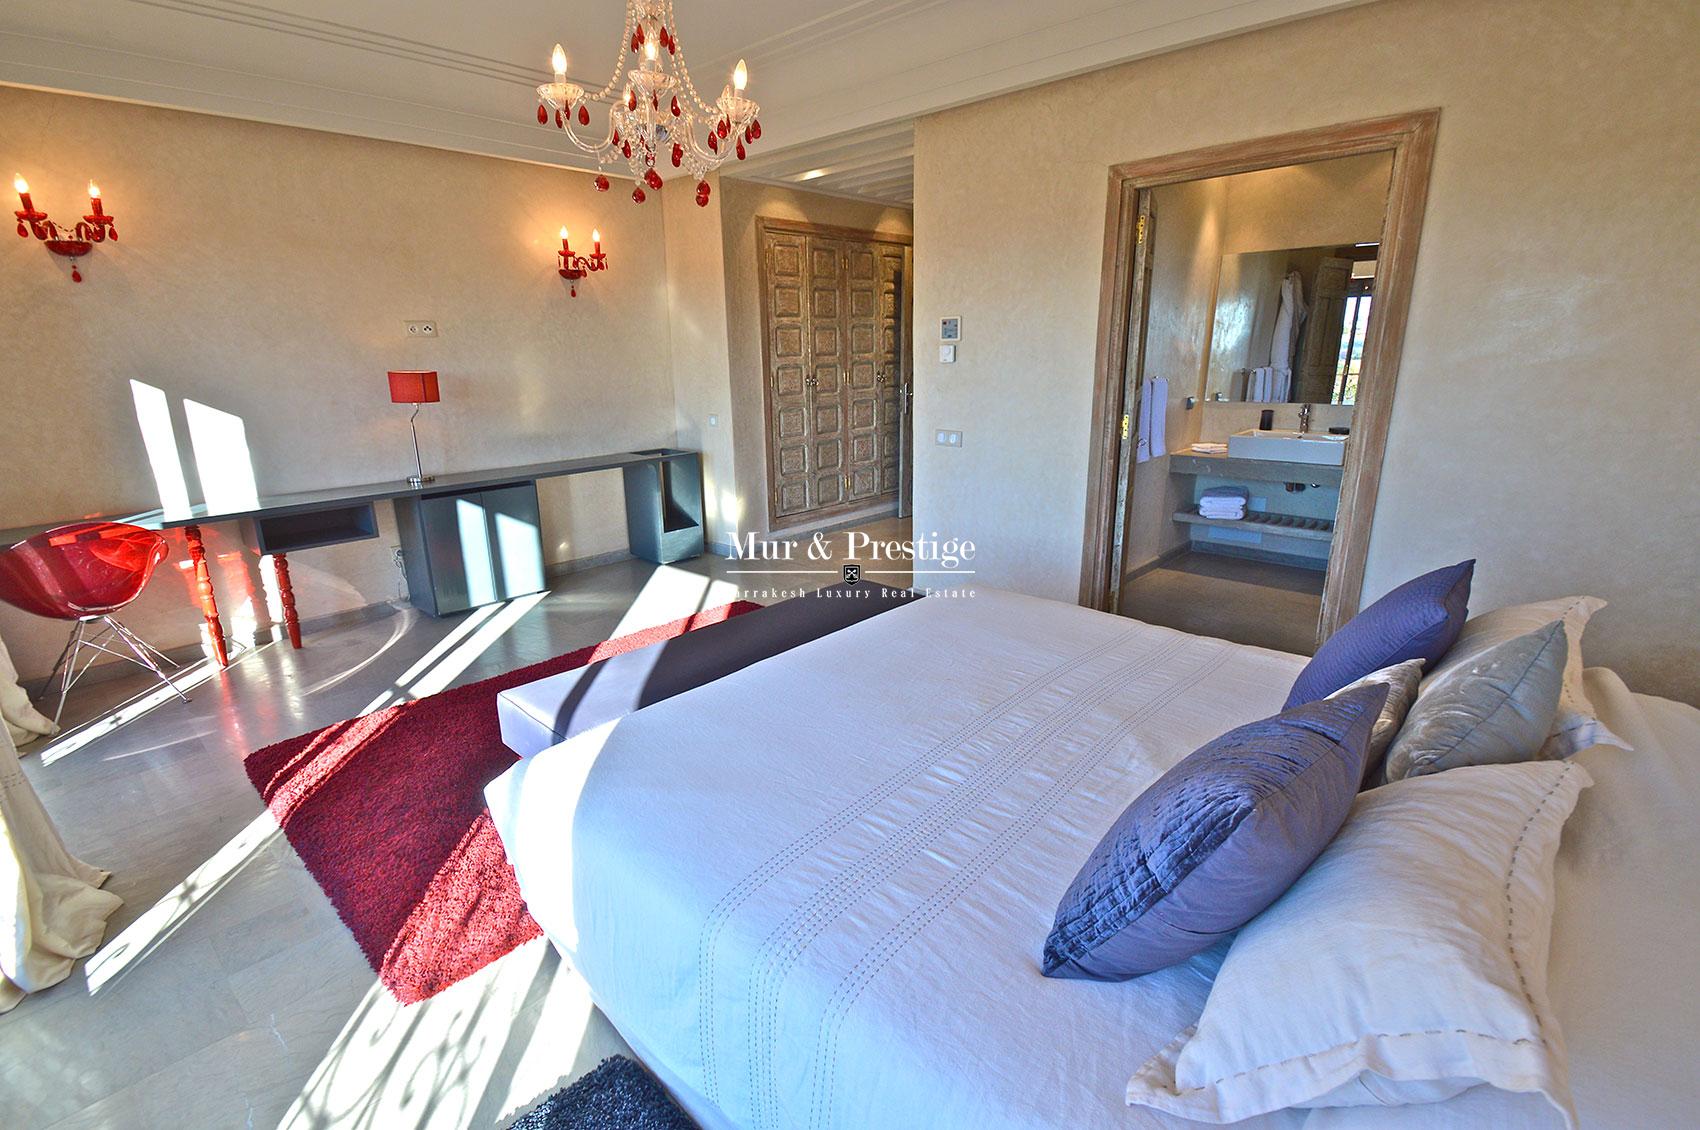 Immobilier de luxe a Marrakech